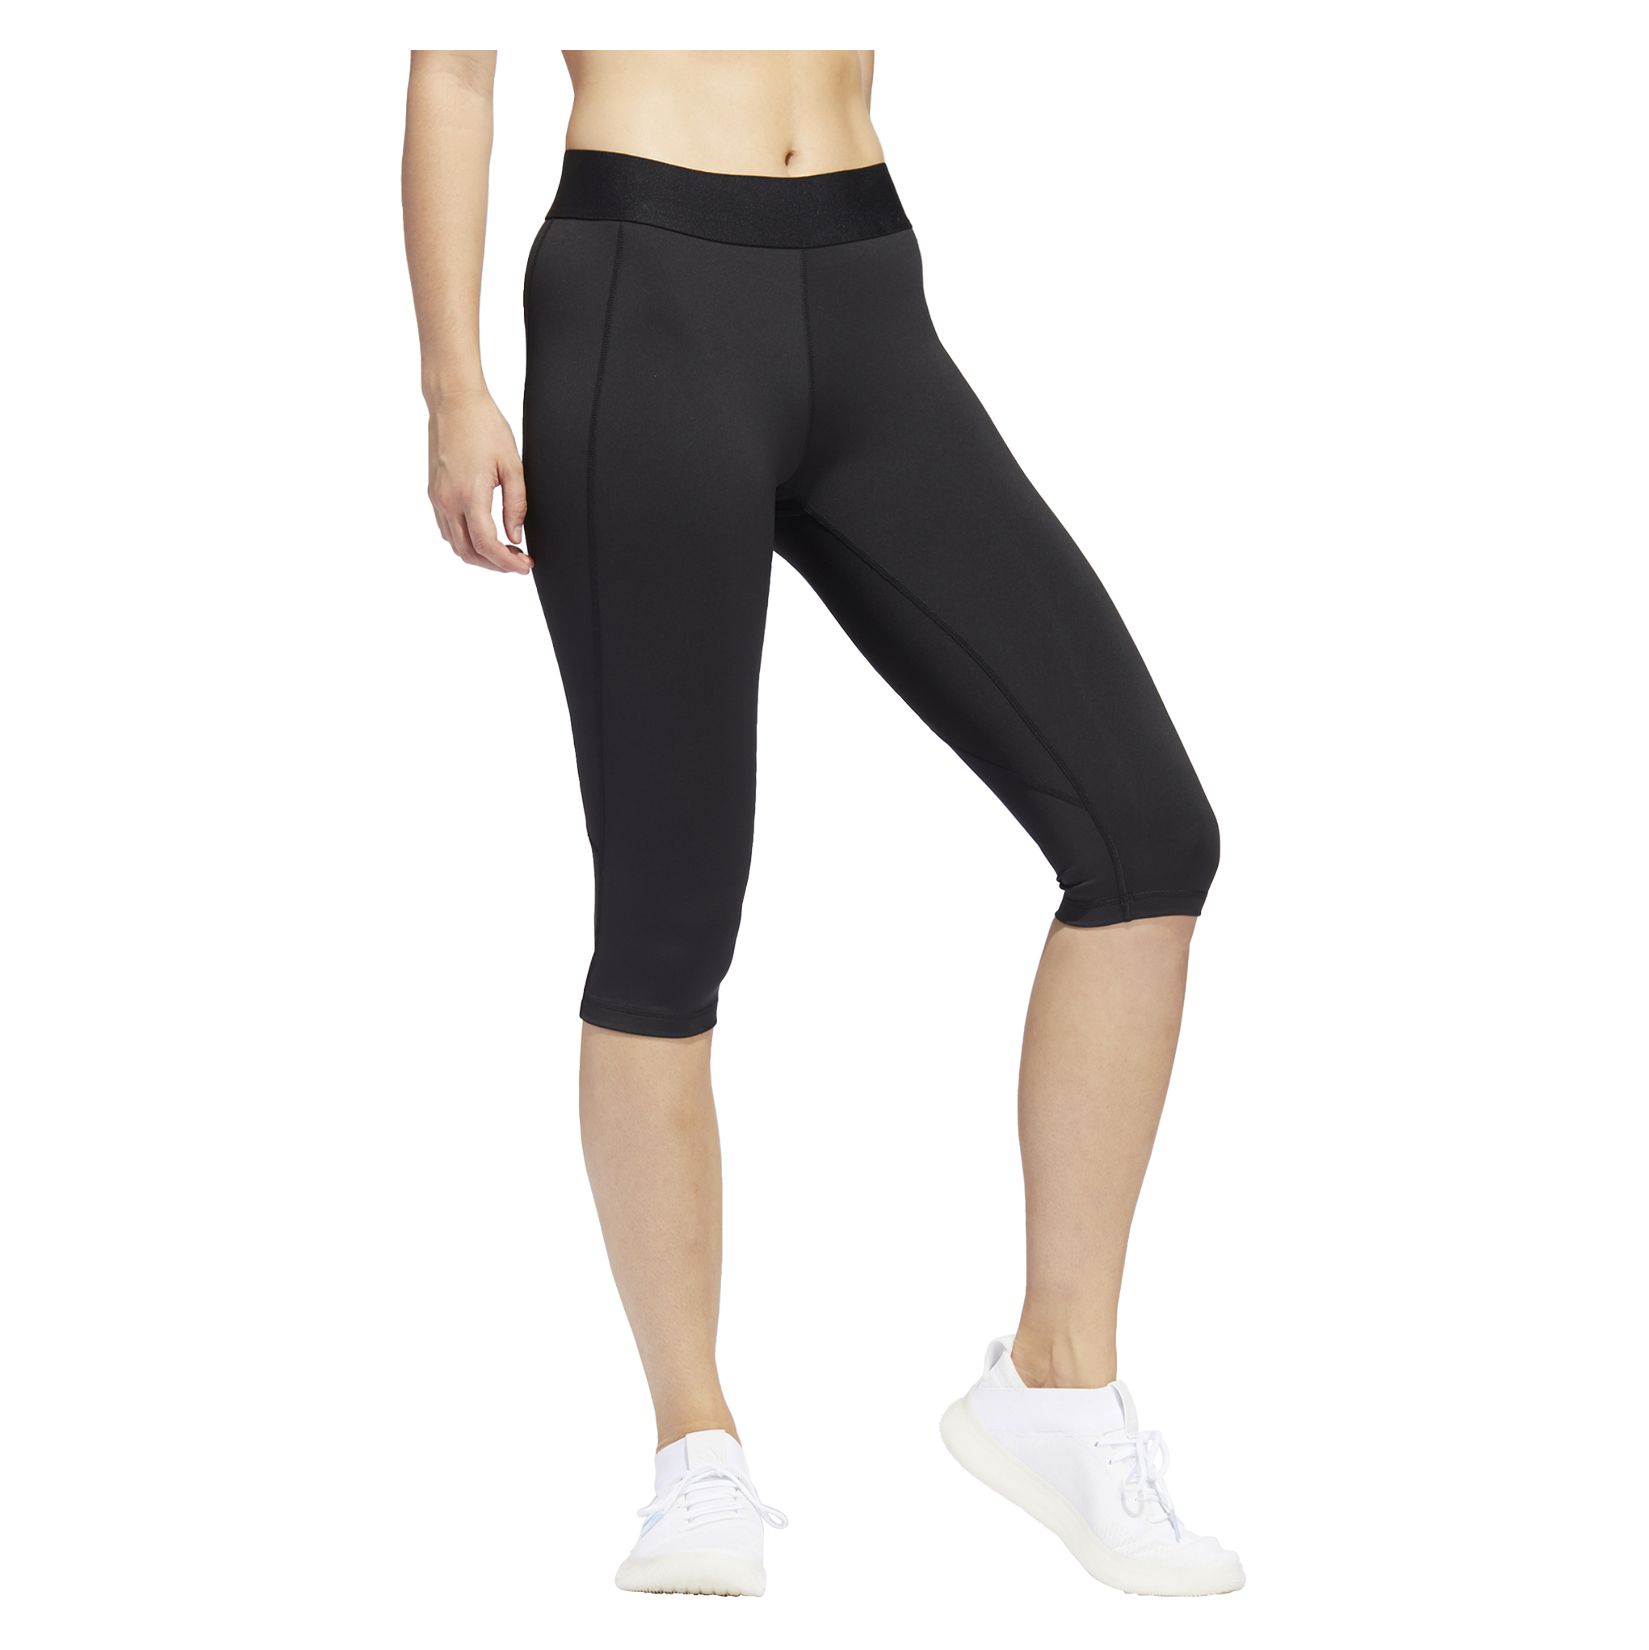 New Adidas Womens Athletic Capri Pants Size S Small dark gray | eBay